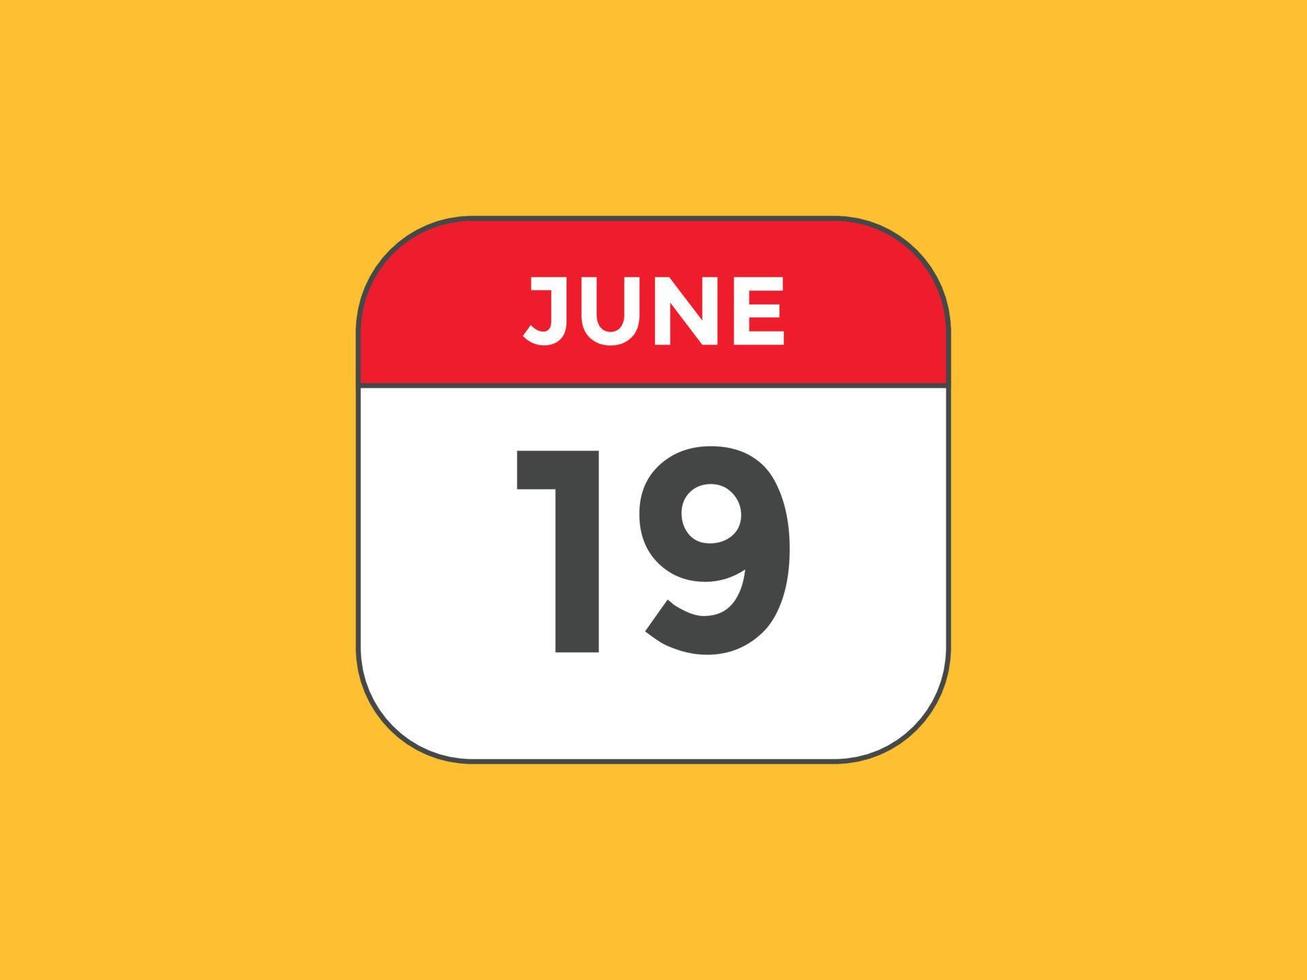 Kalendererinnerung vom 19. Juni. 19. juni tägliche kalendersymbolvorlage. Kalender 19. Juni Icon-Design-Vorlage. Vektor-Illustration vektor